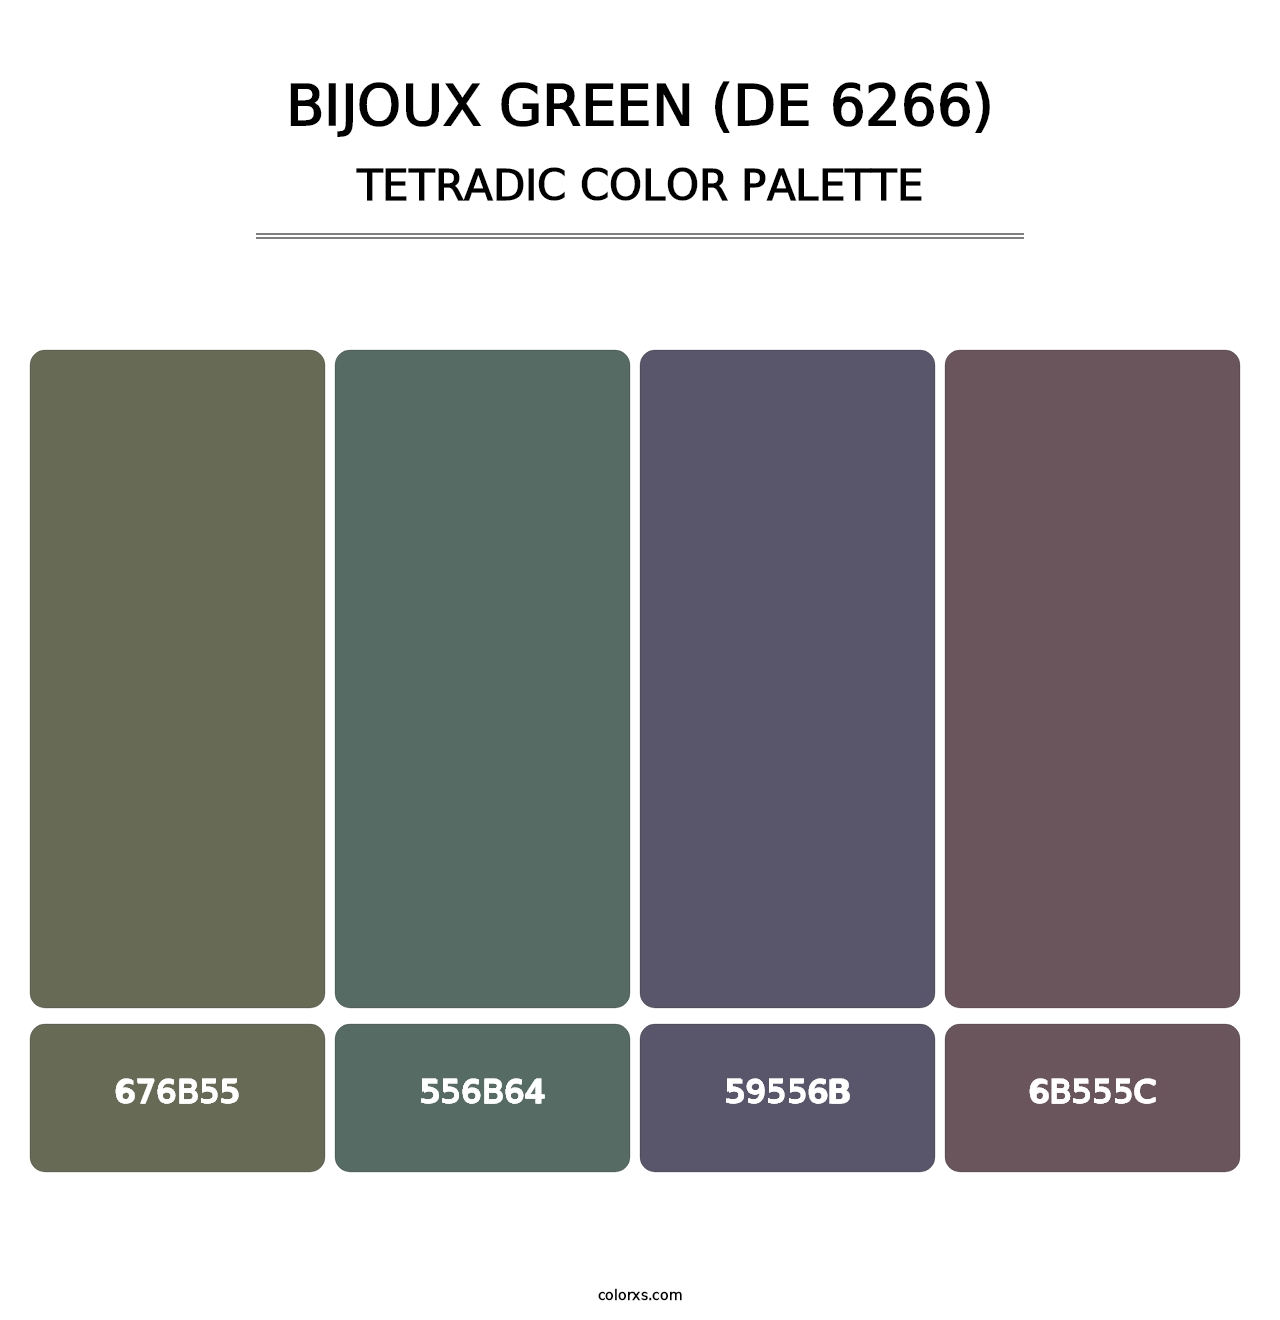 Bijoux Green (DE 6266) - Tetradic Color Palette